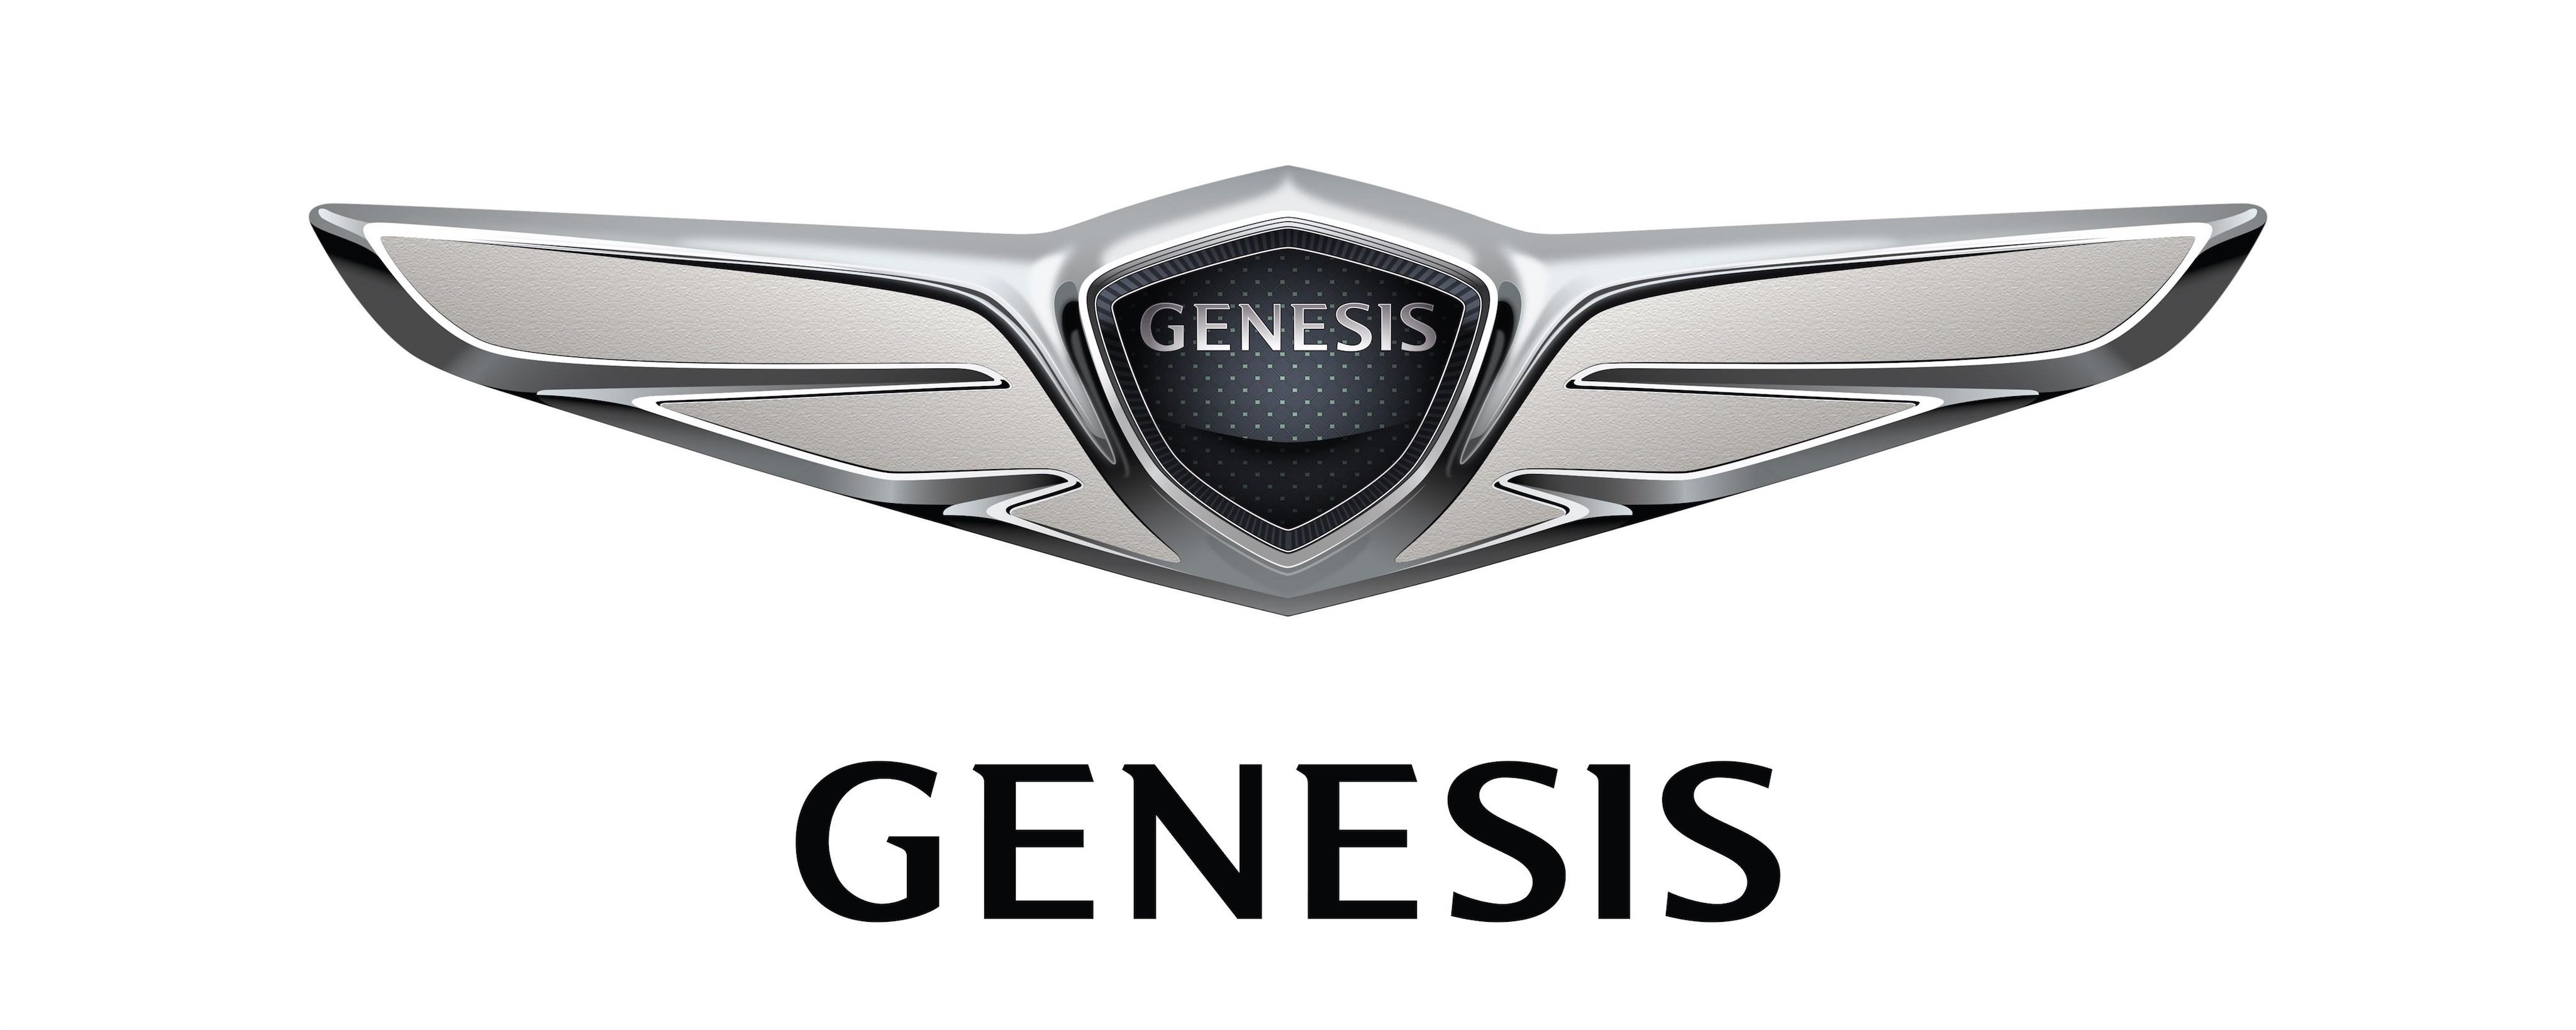 16++ Genesis car logo with wings ideas in 2022 